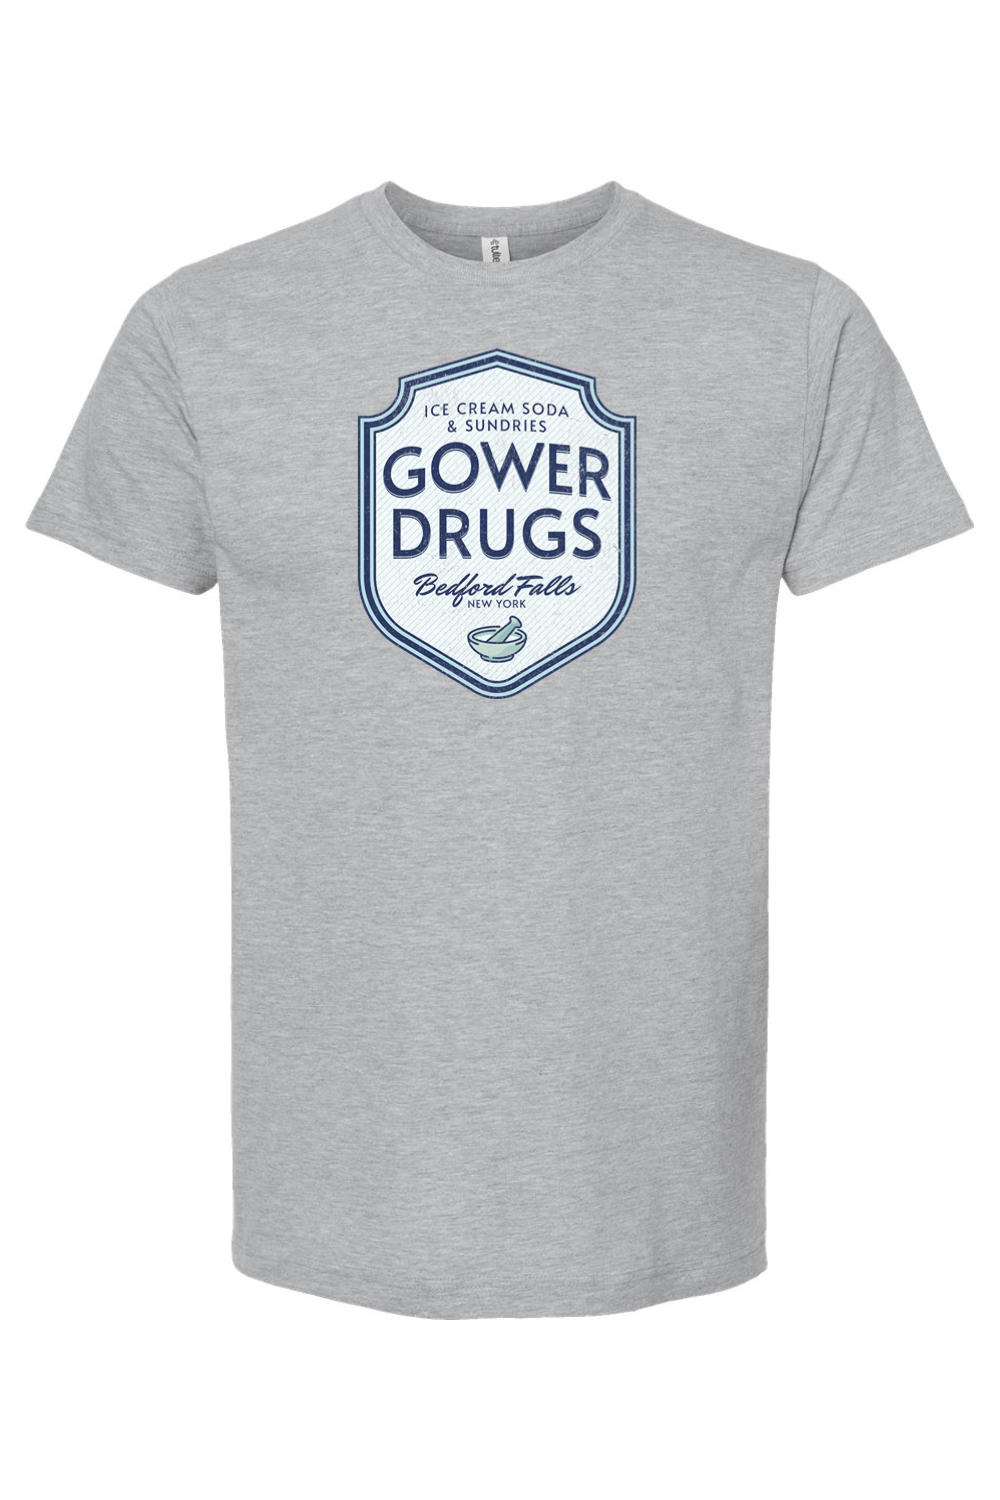 Gower Drugs -  It's a Wonderful Life - Yinzylvania